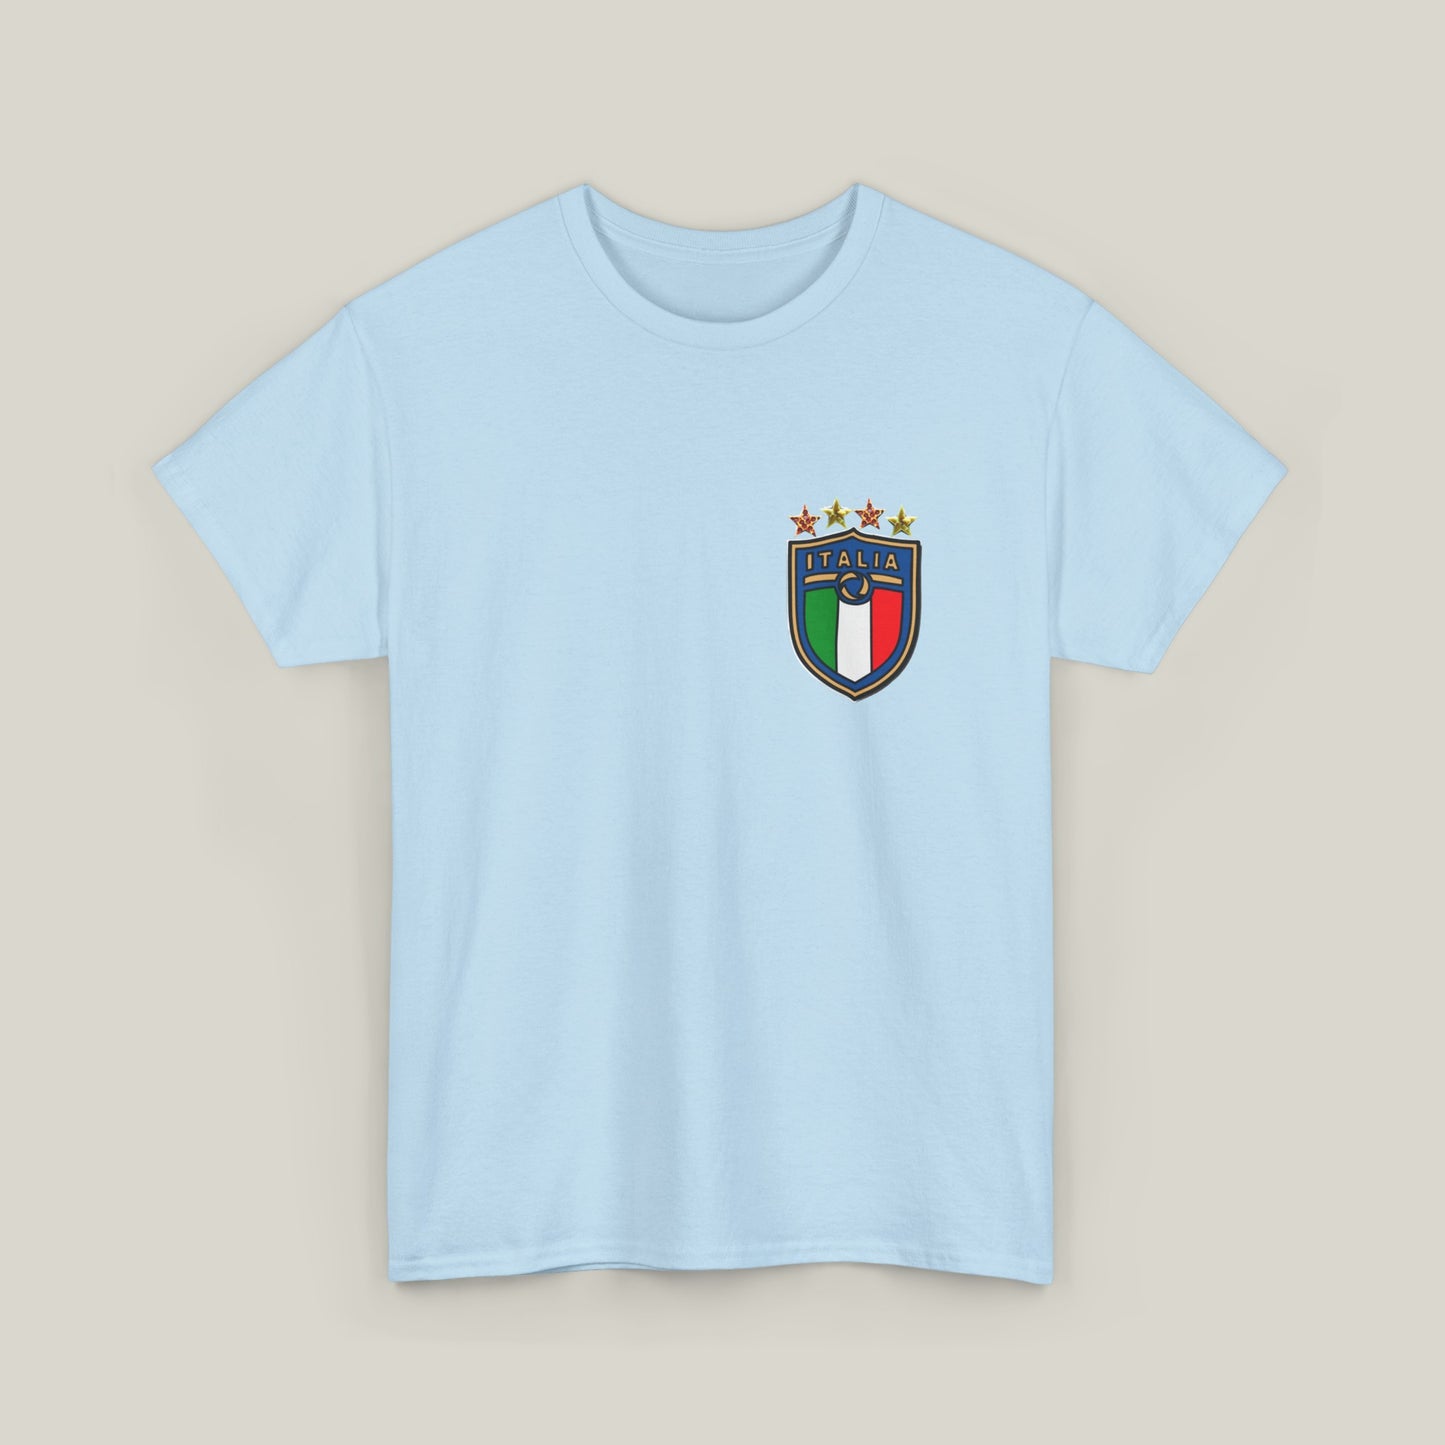 Italy Pizza Pasta Jersey - T-Shirt Unisex